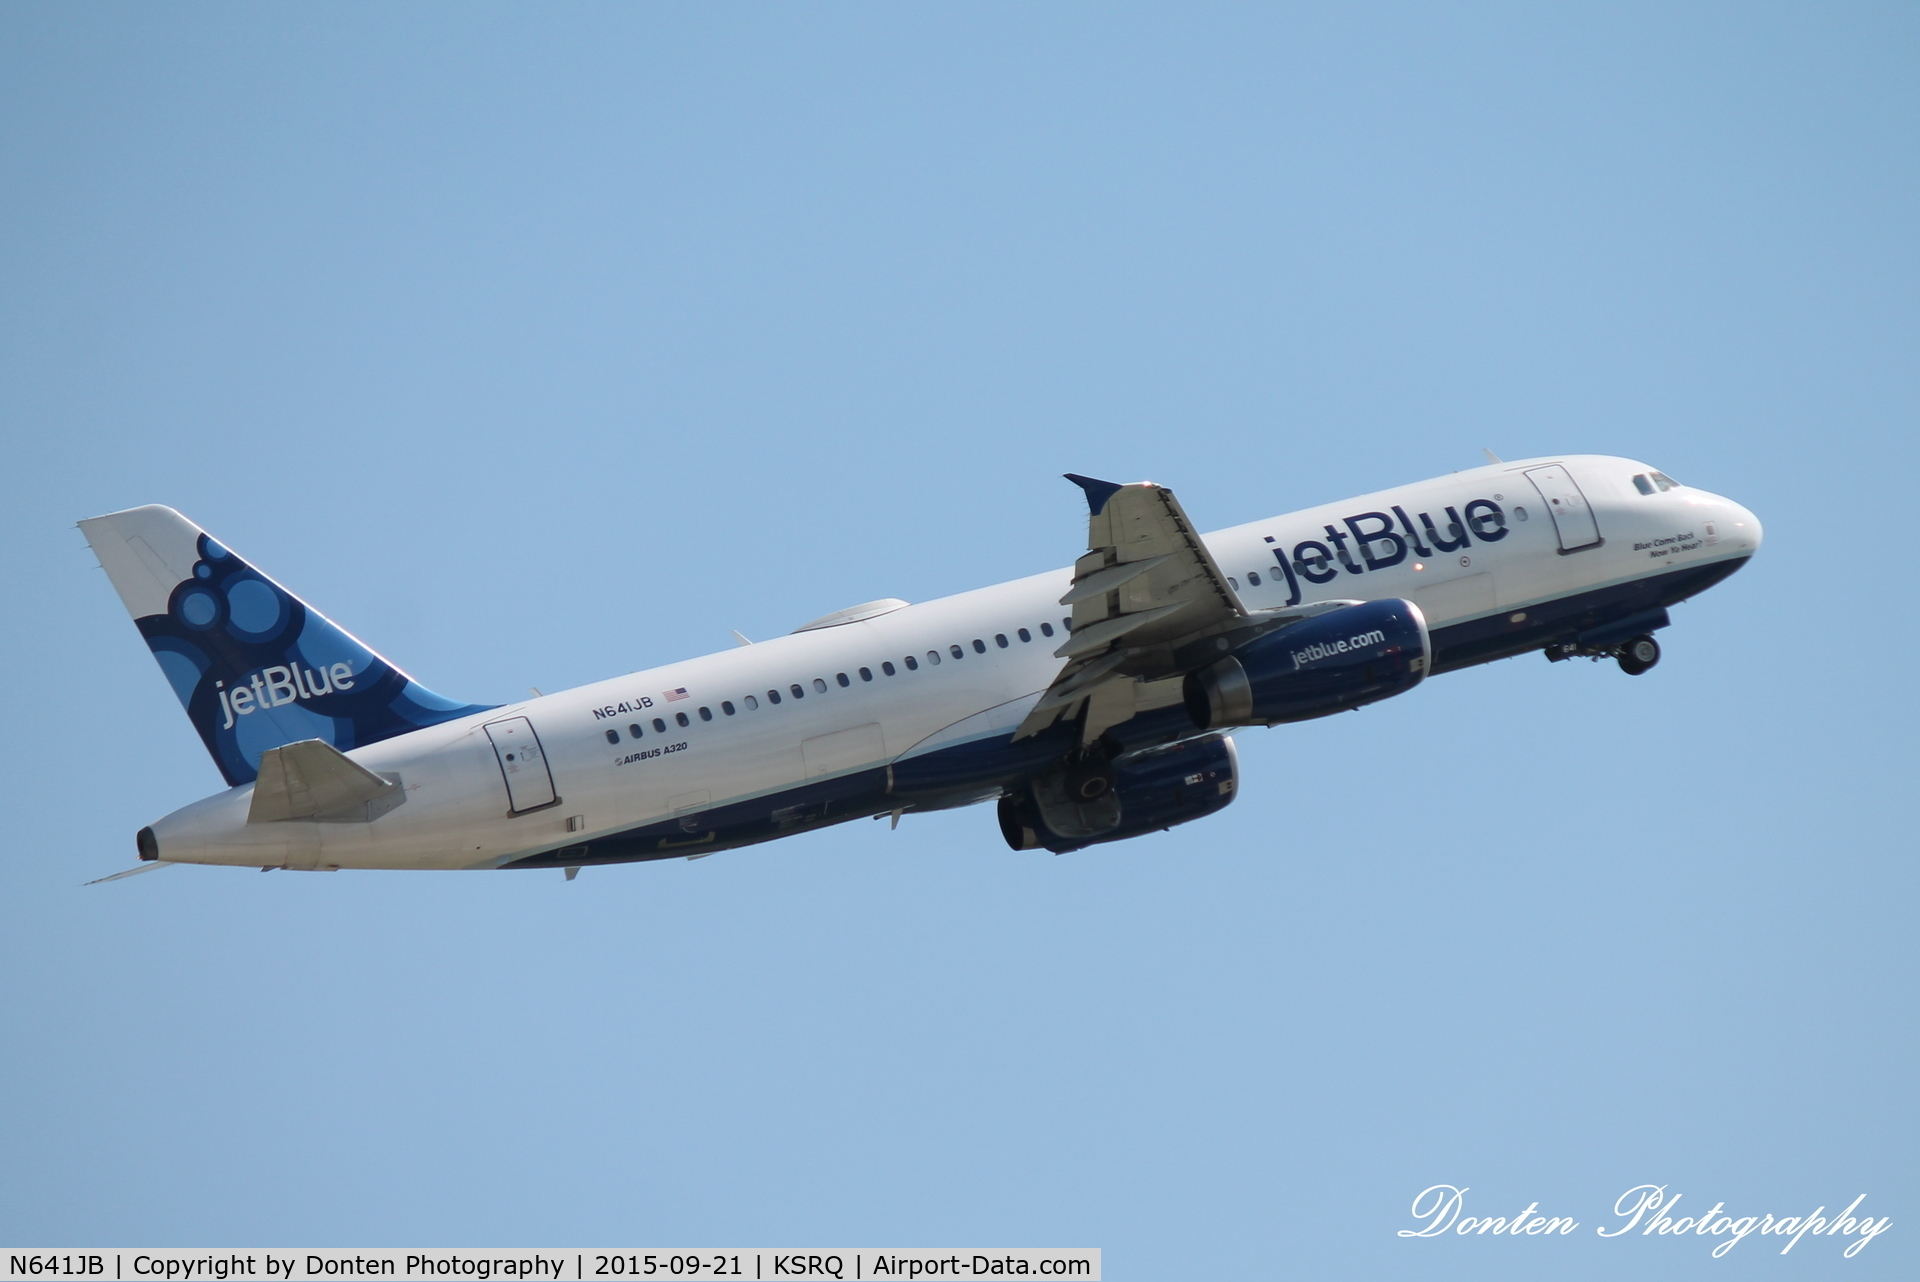 N641JB, 2006 Airbus A320-232 C/N 2848, JetBlue Flight 164 (N641JB) Blue Come Back Now Ya Hear departs Sarasota-Bradenton International Airport enroute to John F Kennedy International Airport